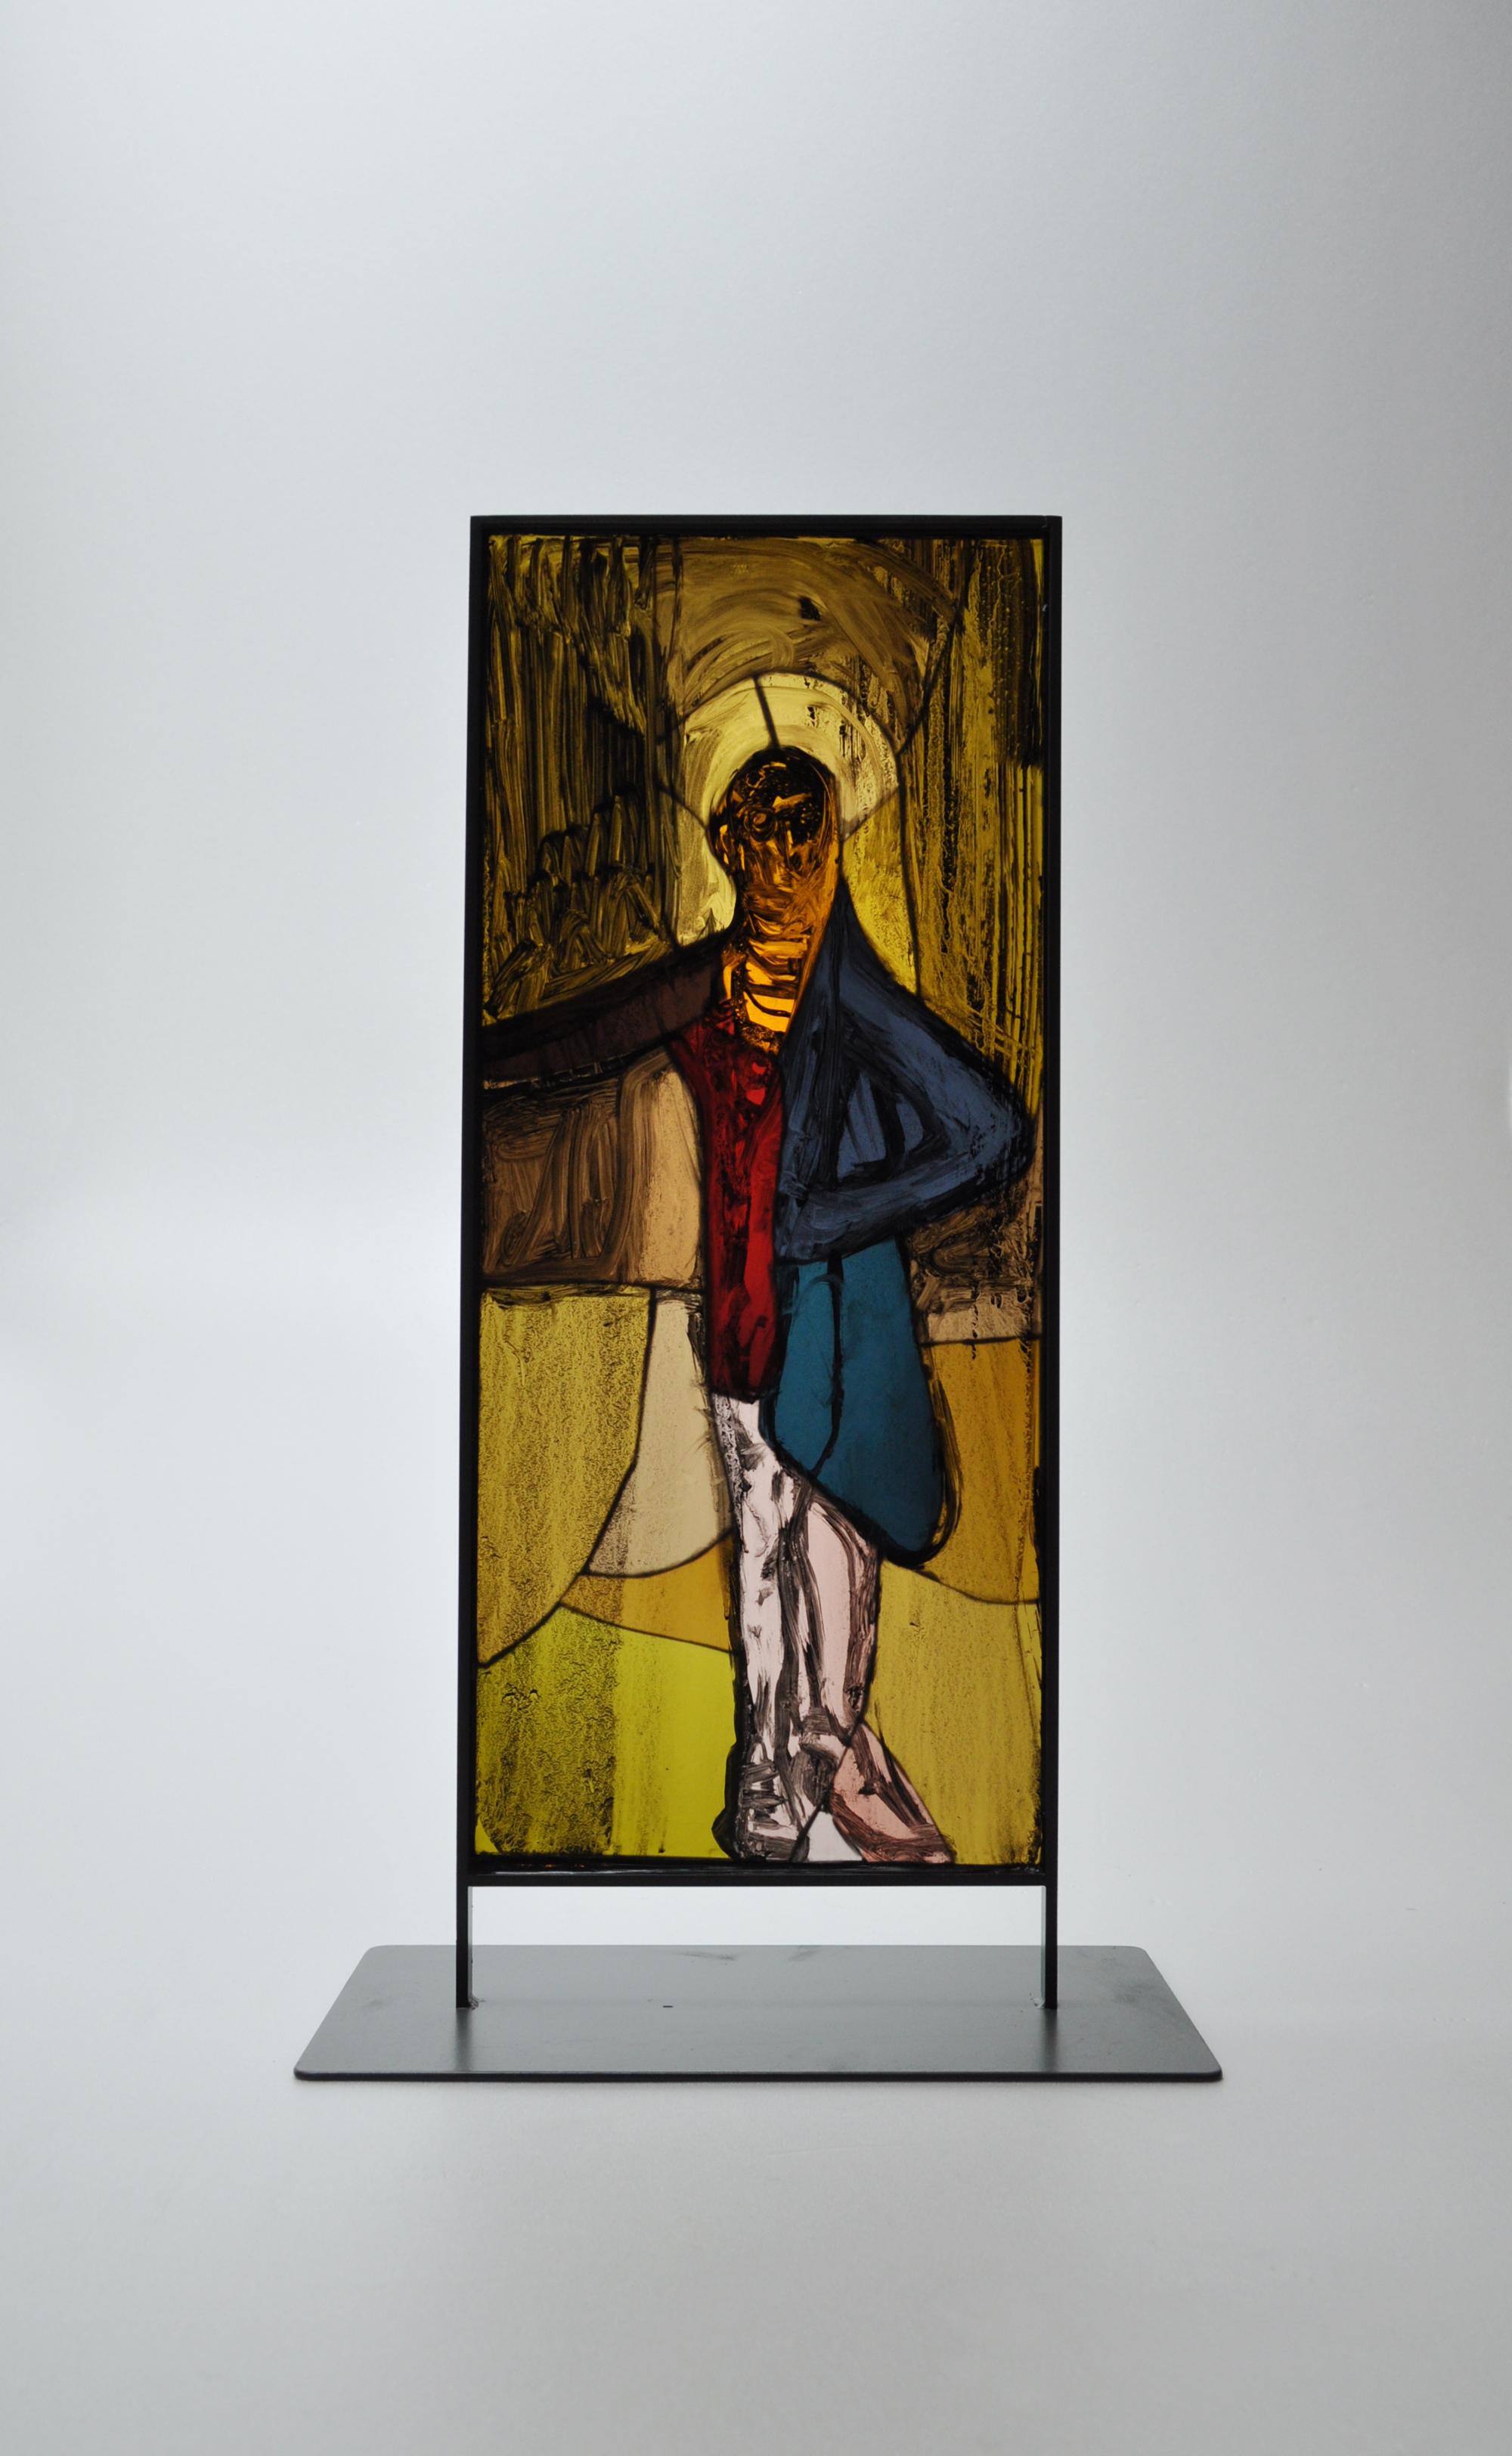 Scandinavian Stained Glass Mosaic Sculpture
by the Danish artist Peter Brandes,  ca. 2010
Art size: 61.5 cm H x 24.5 cm W x 2 D cm
Base size: 35 cm W x 18 cm D

Peter Brandes, 1944-, Danish painter, graphic designer and sculptor. After an